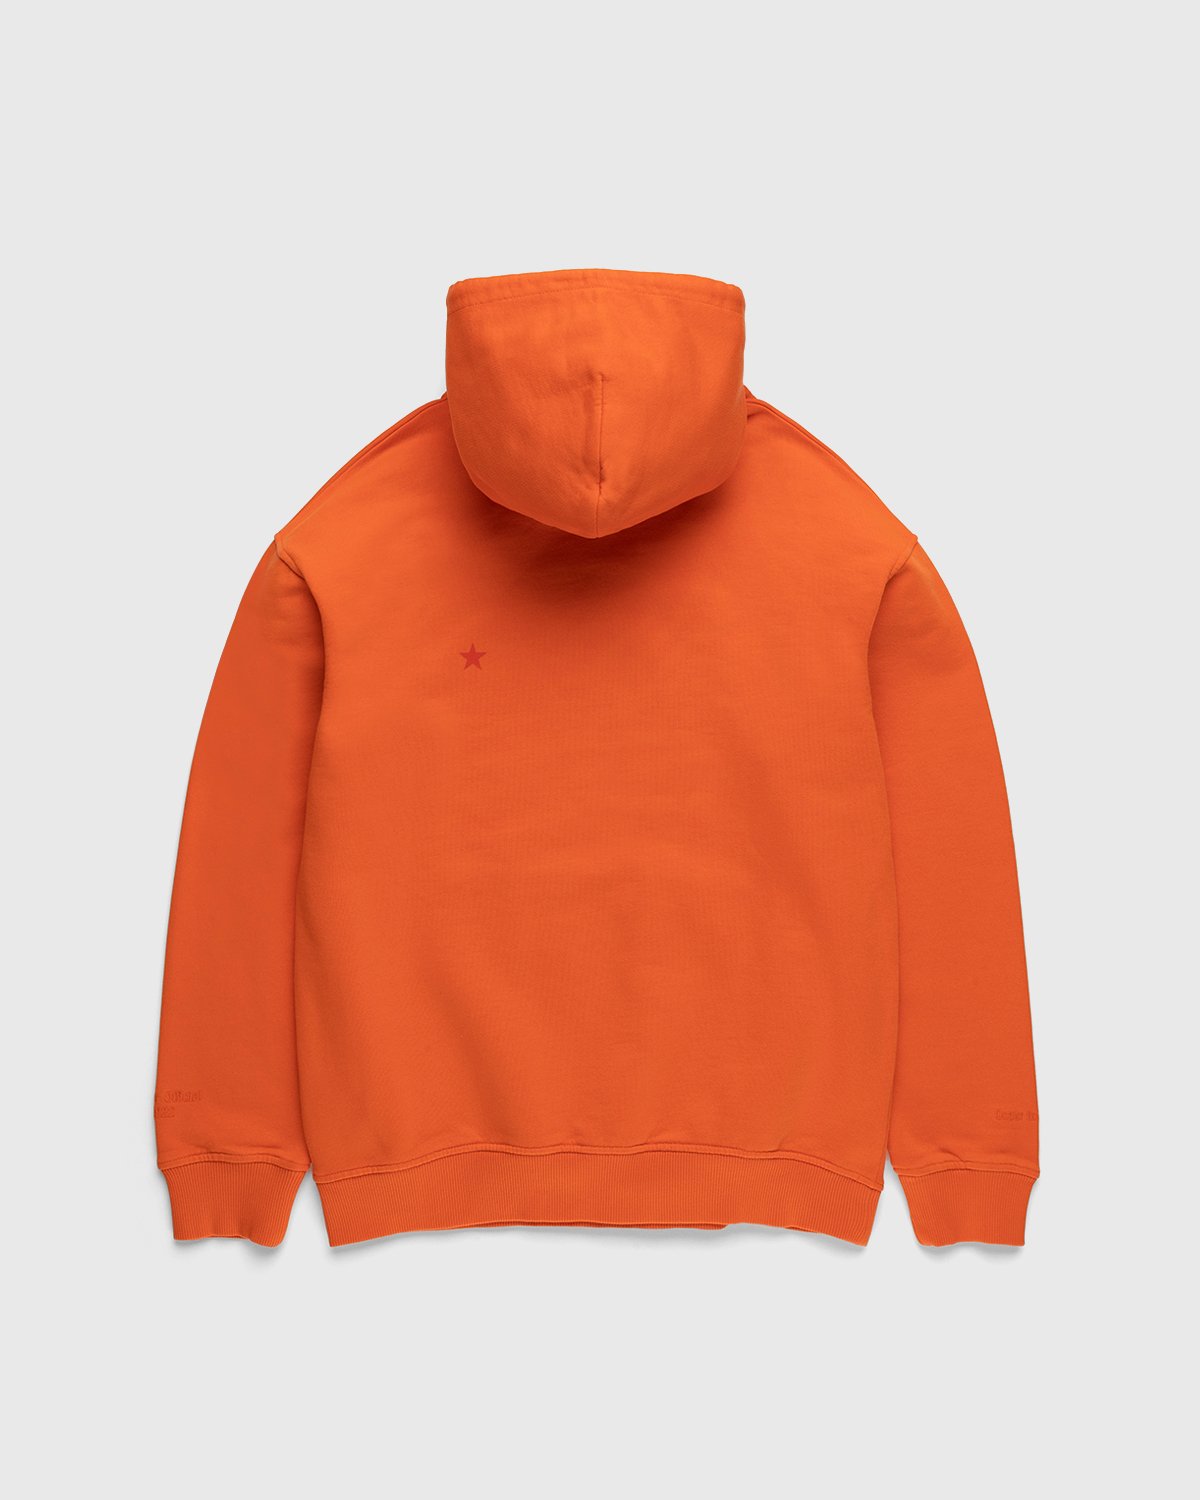 Souvenir - Eunify G-Dye Hoodie Flame - Clothing - Orange - Image 2